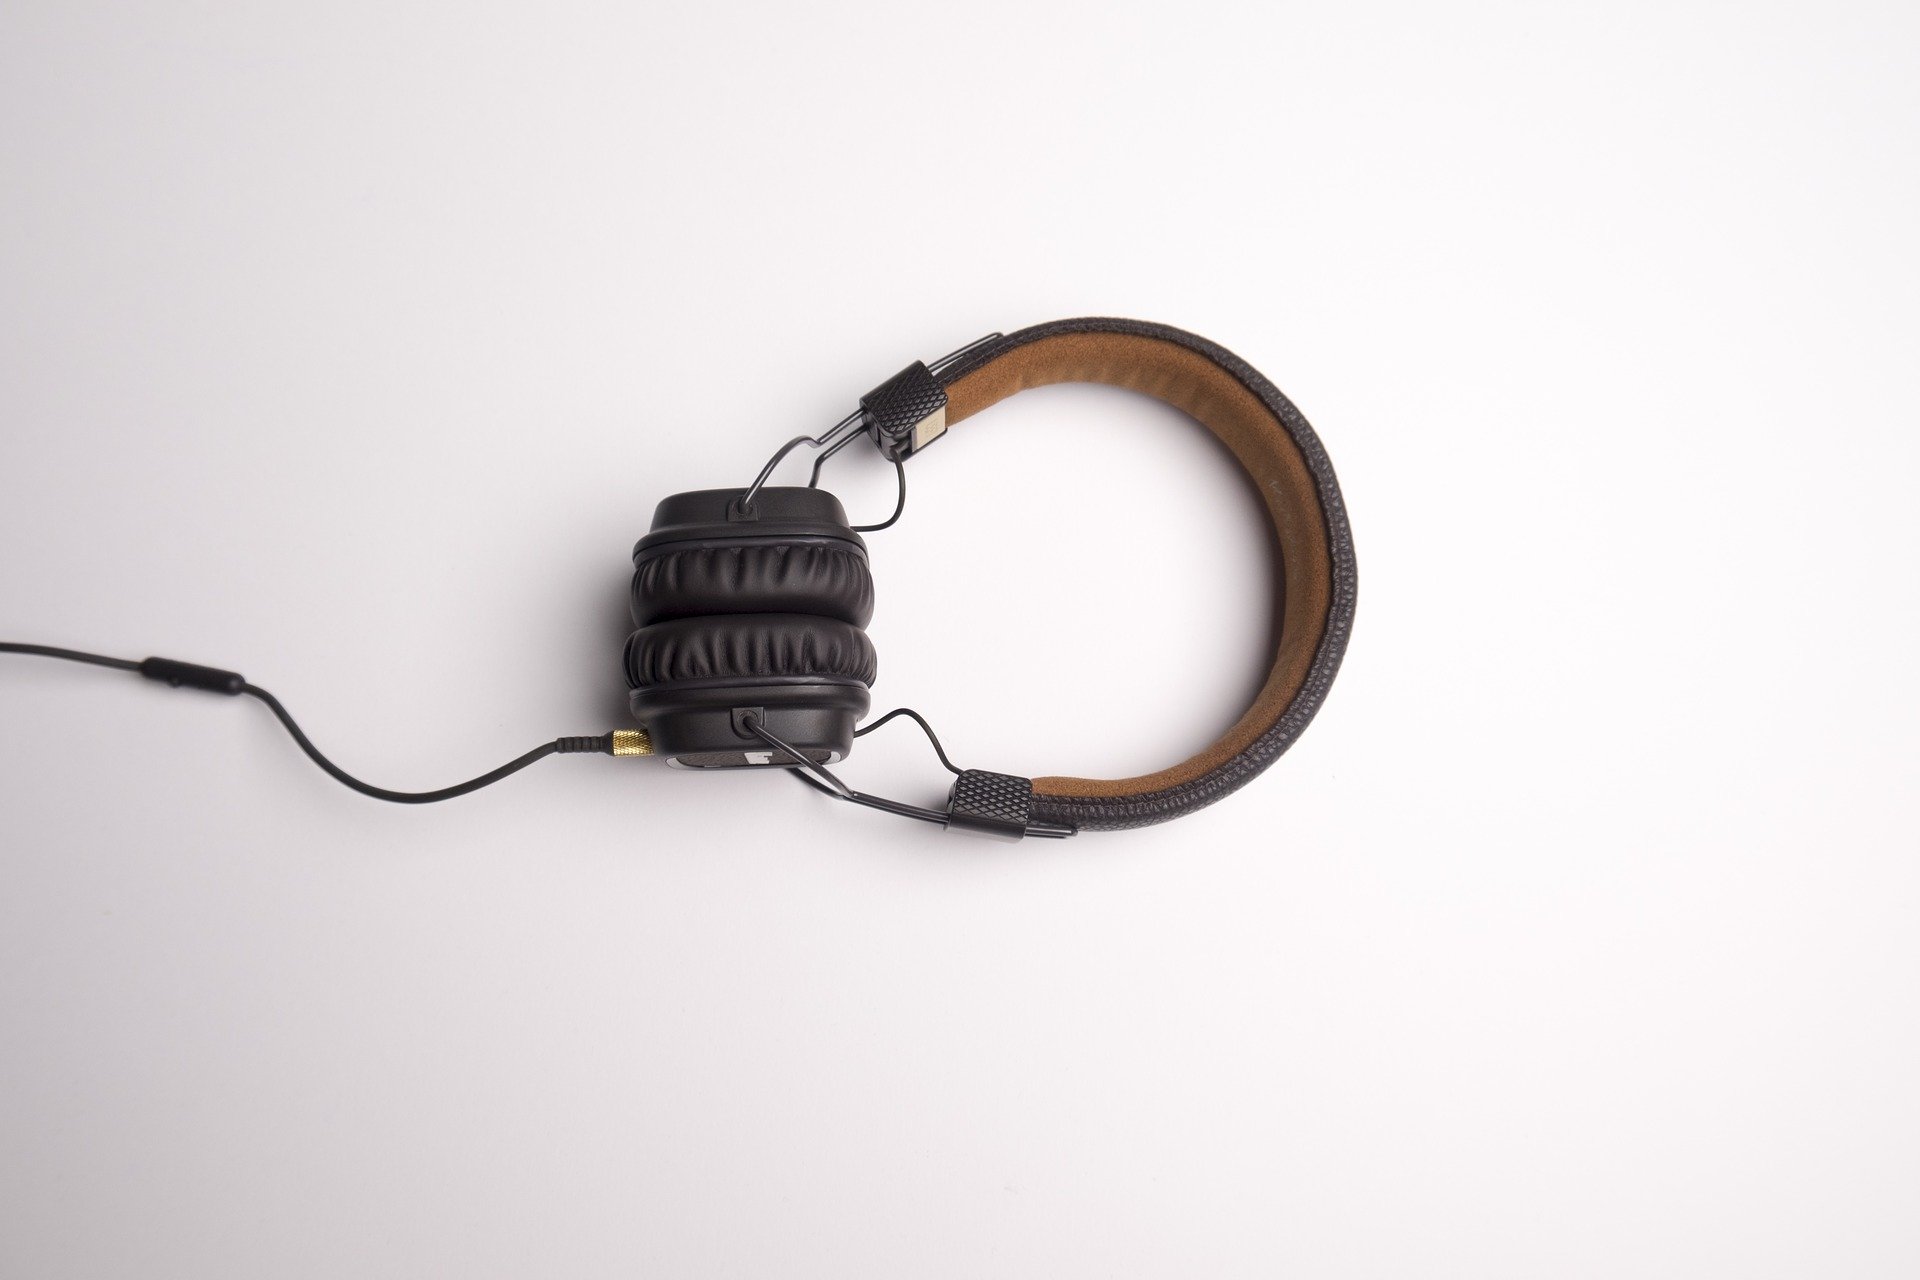 image of headphones